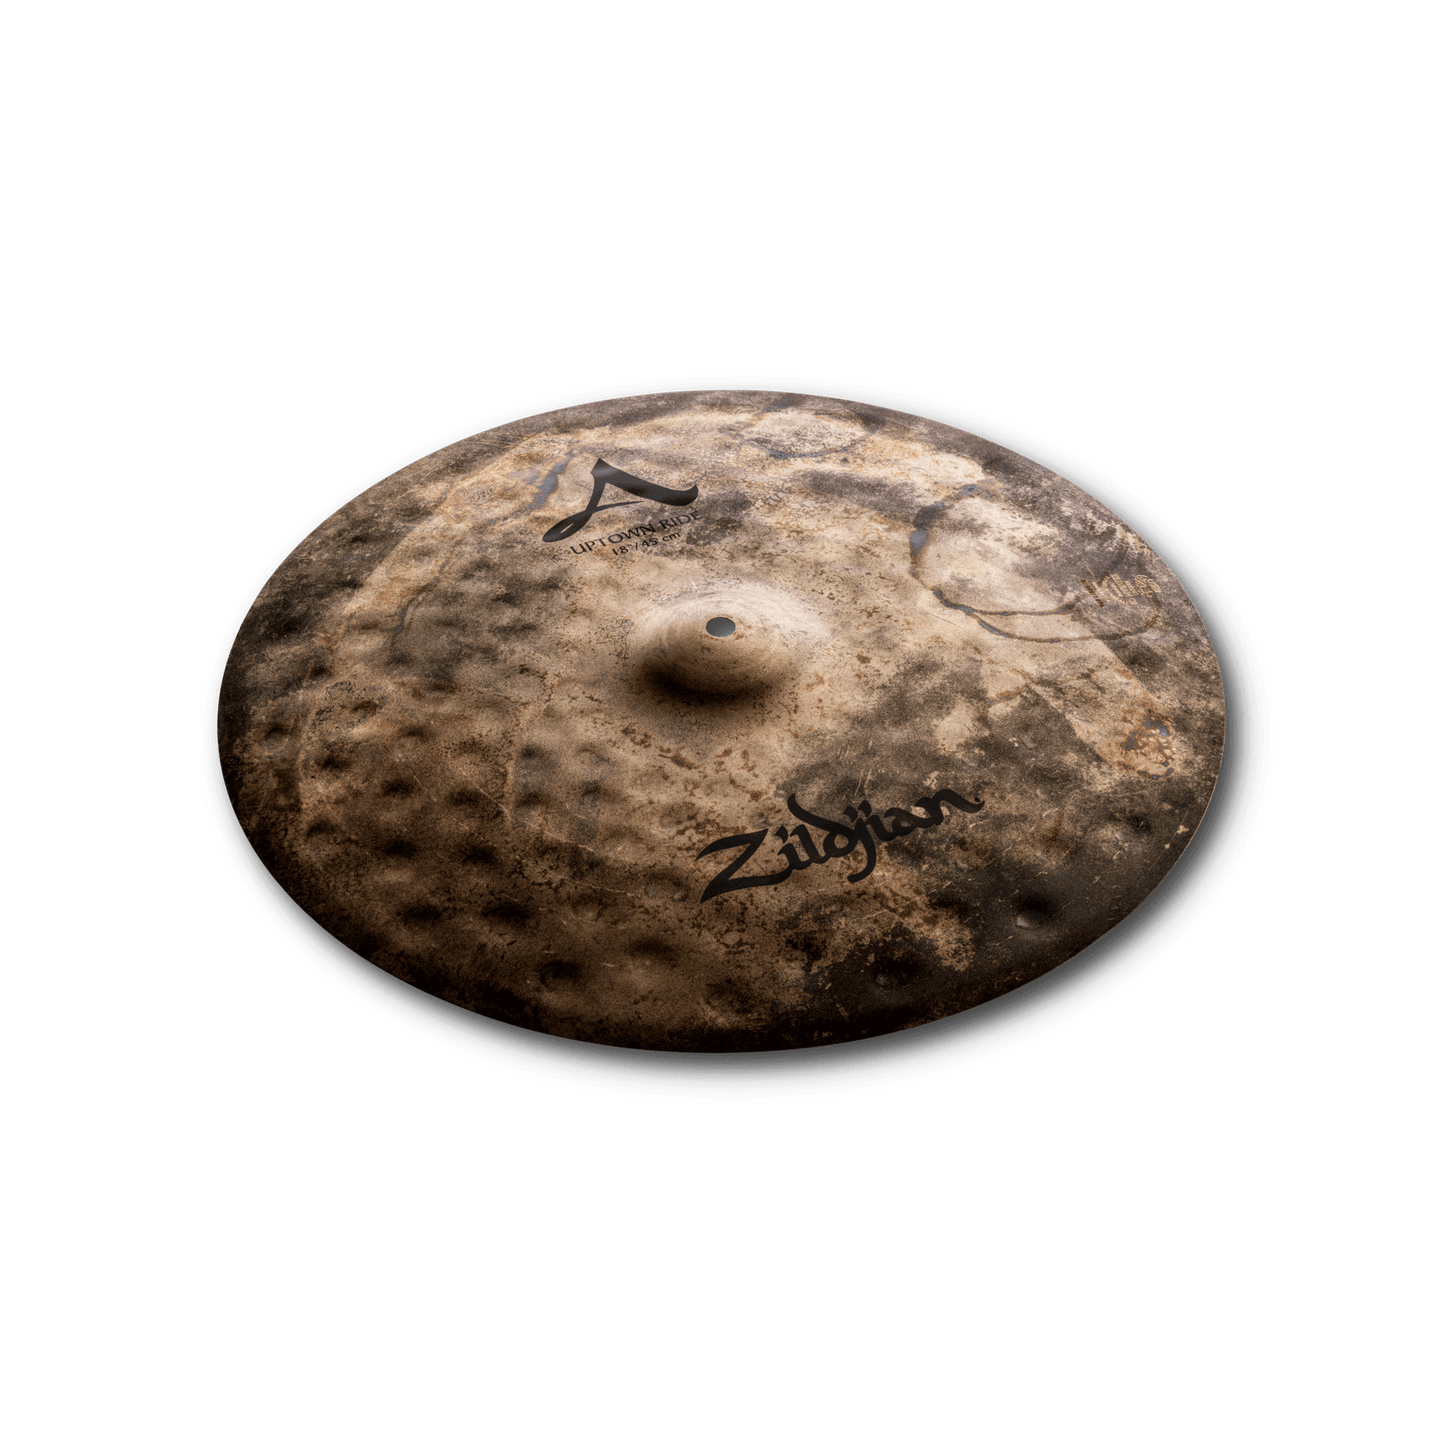 A Zildjian City Cymbal Pack